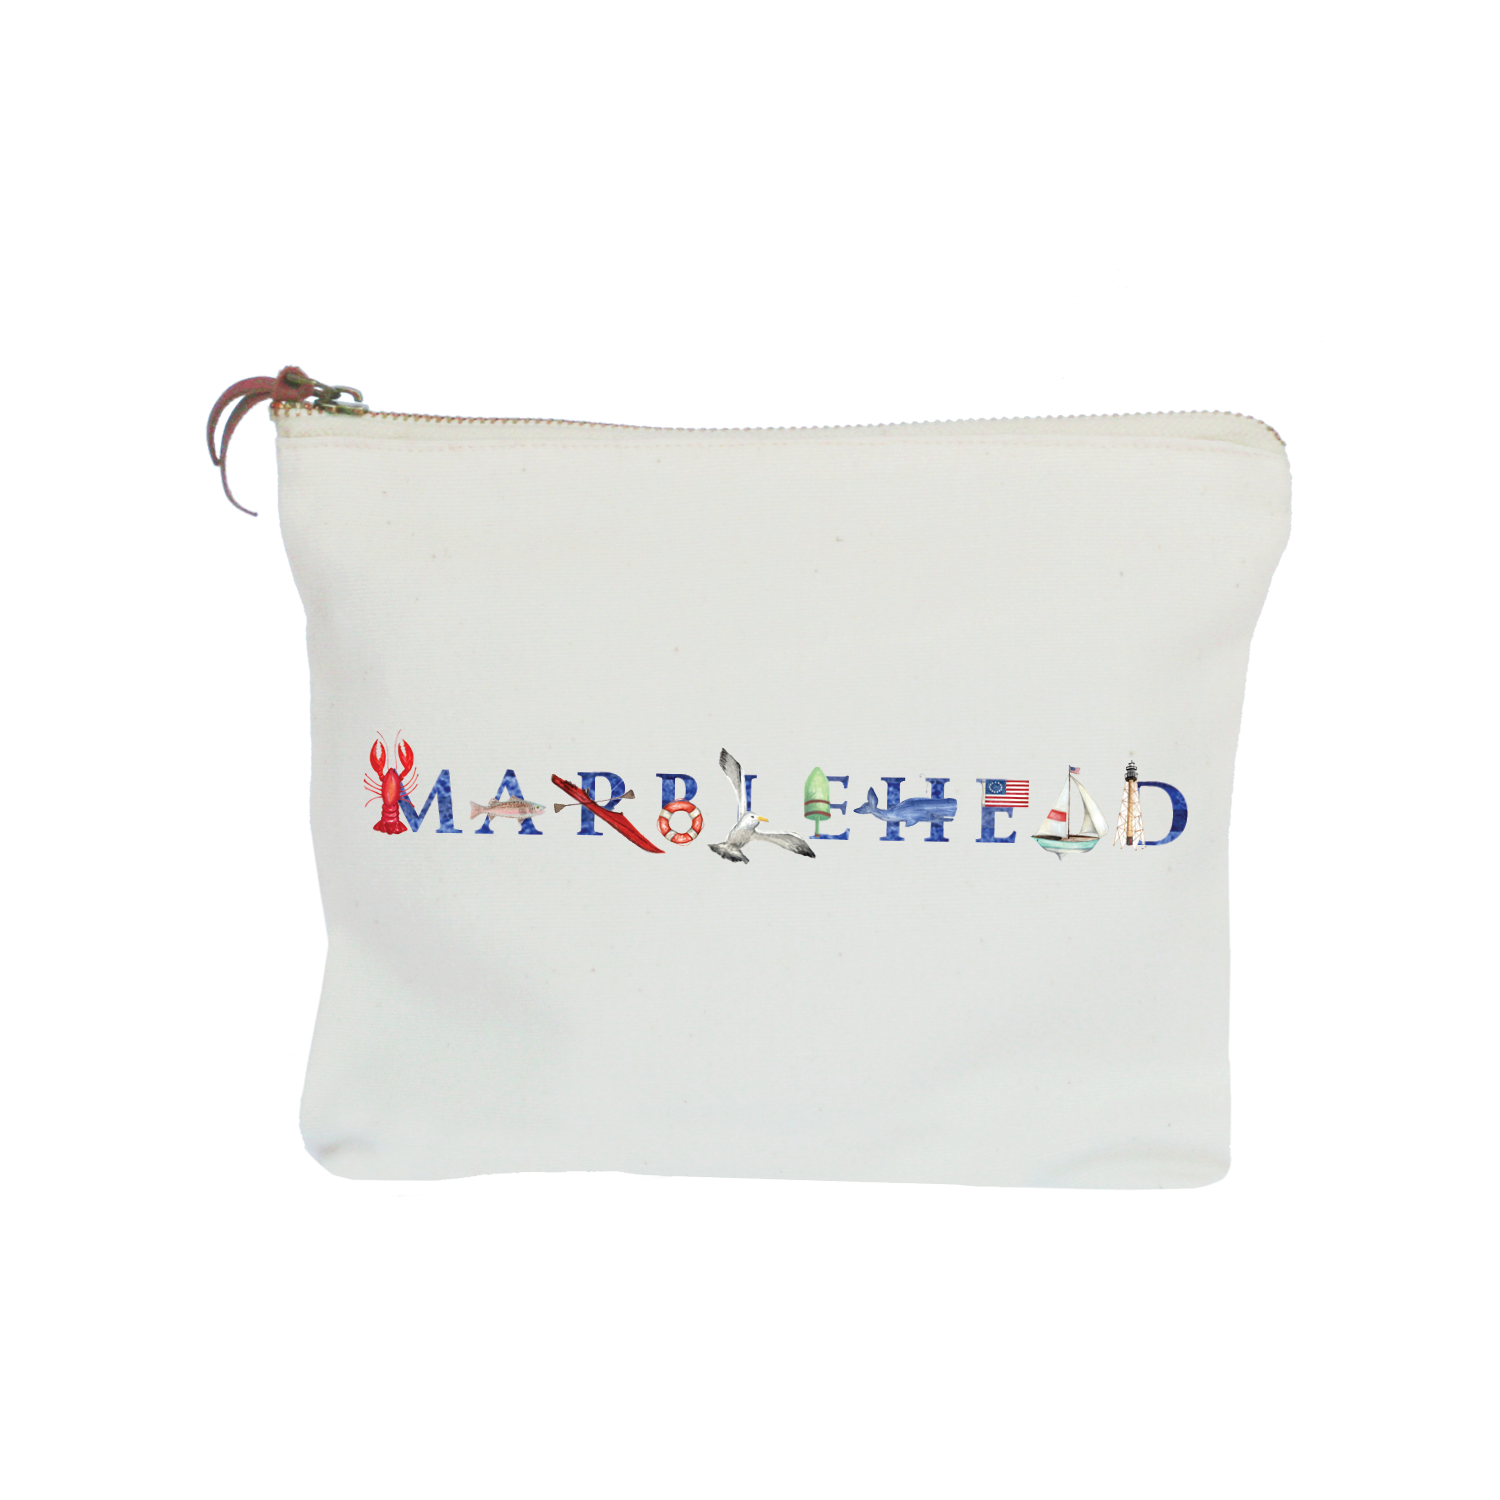 Marblehead zipper pouch